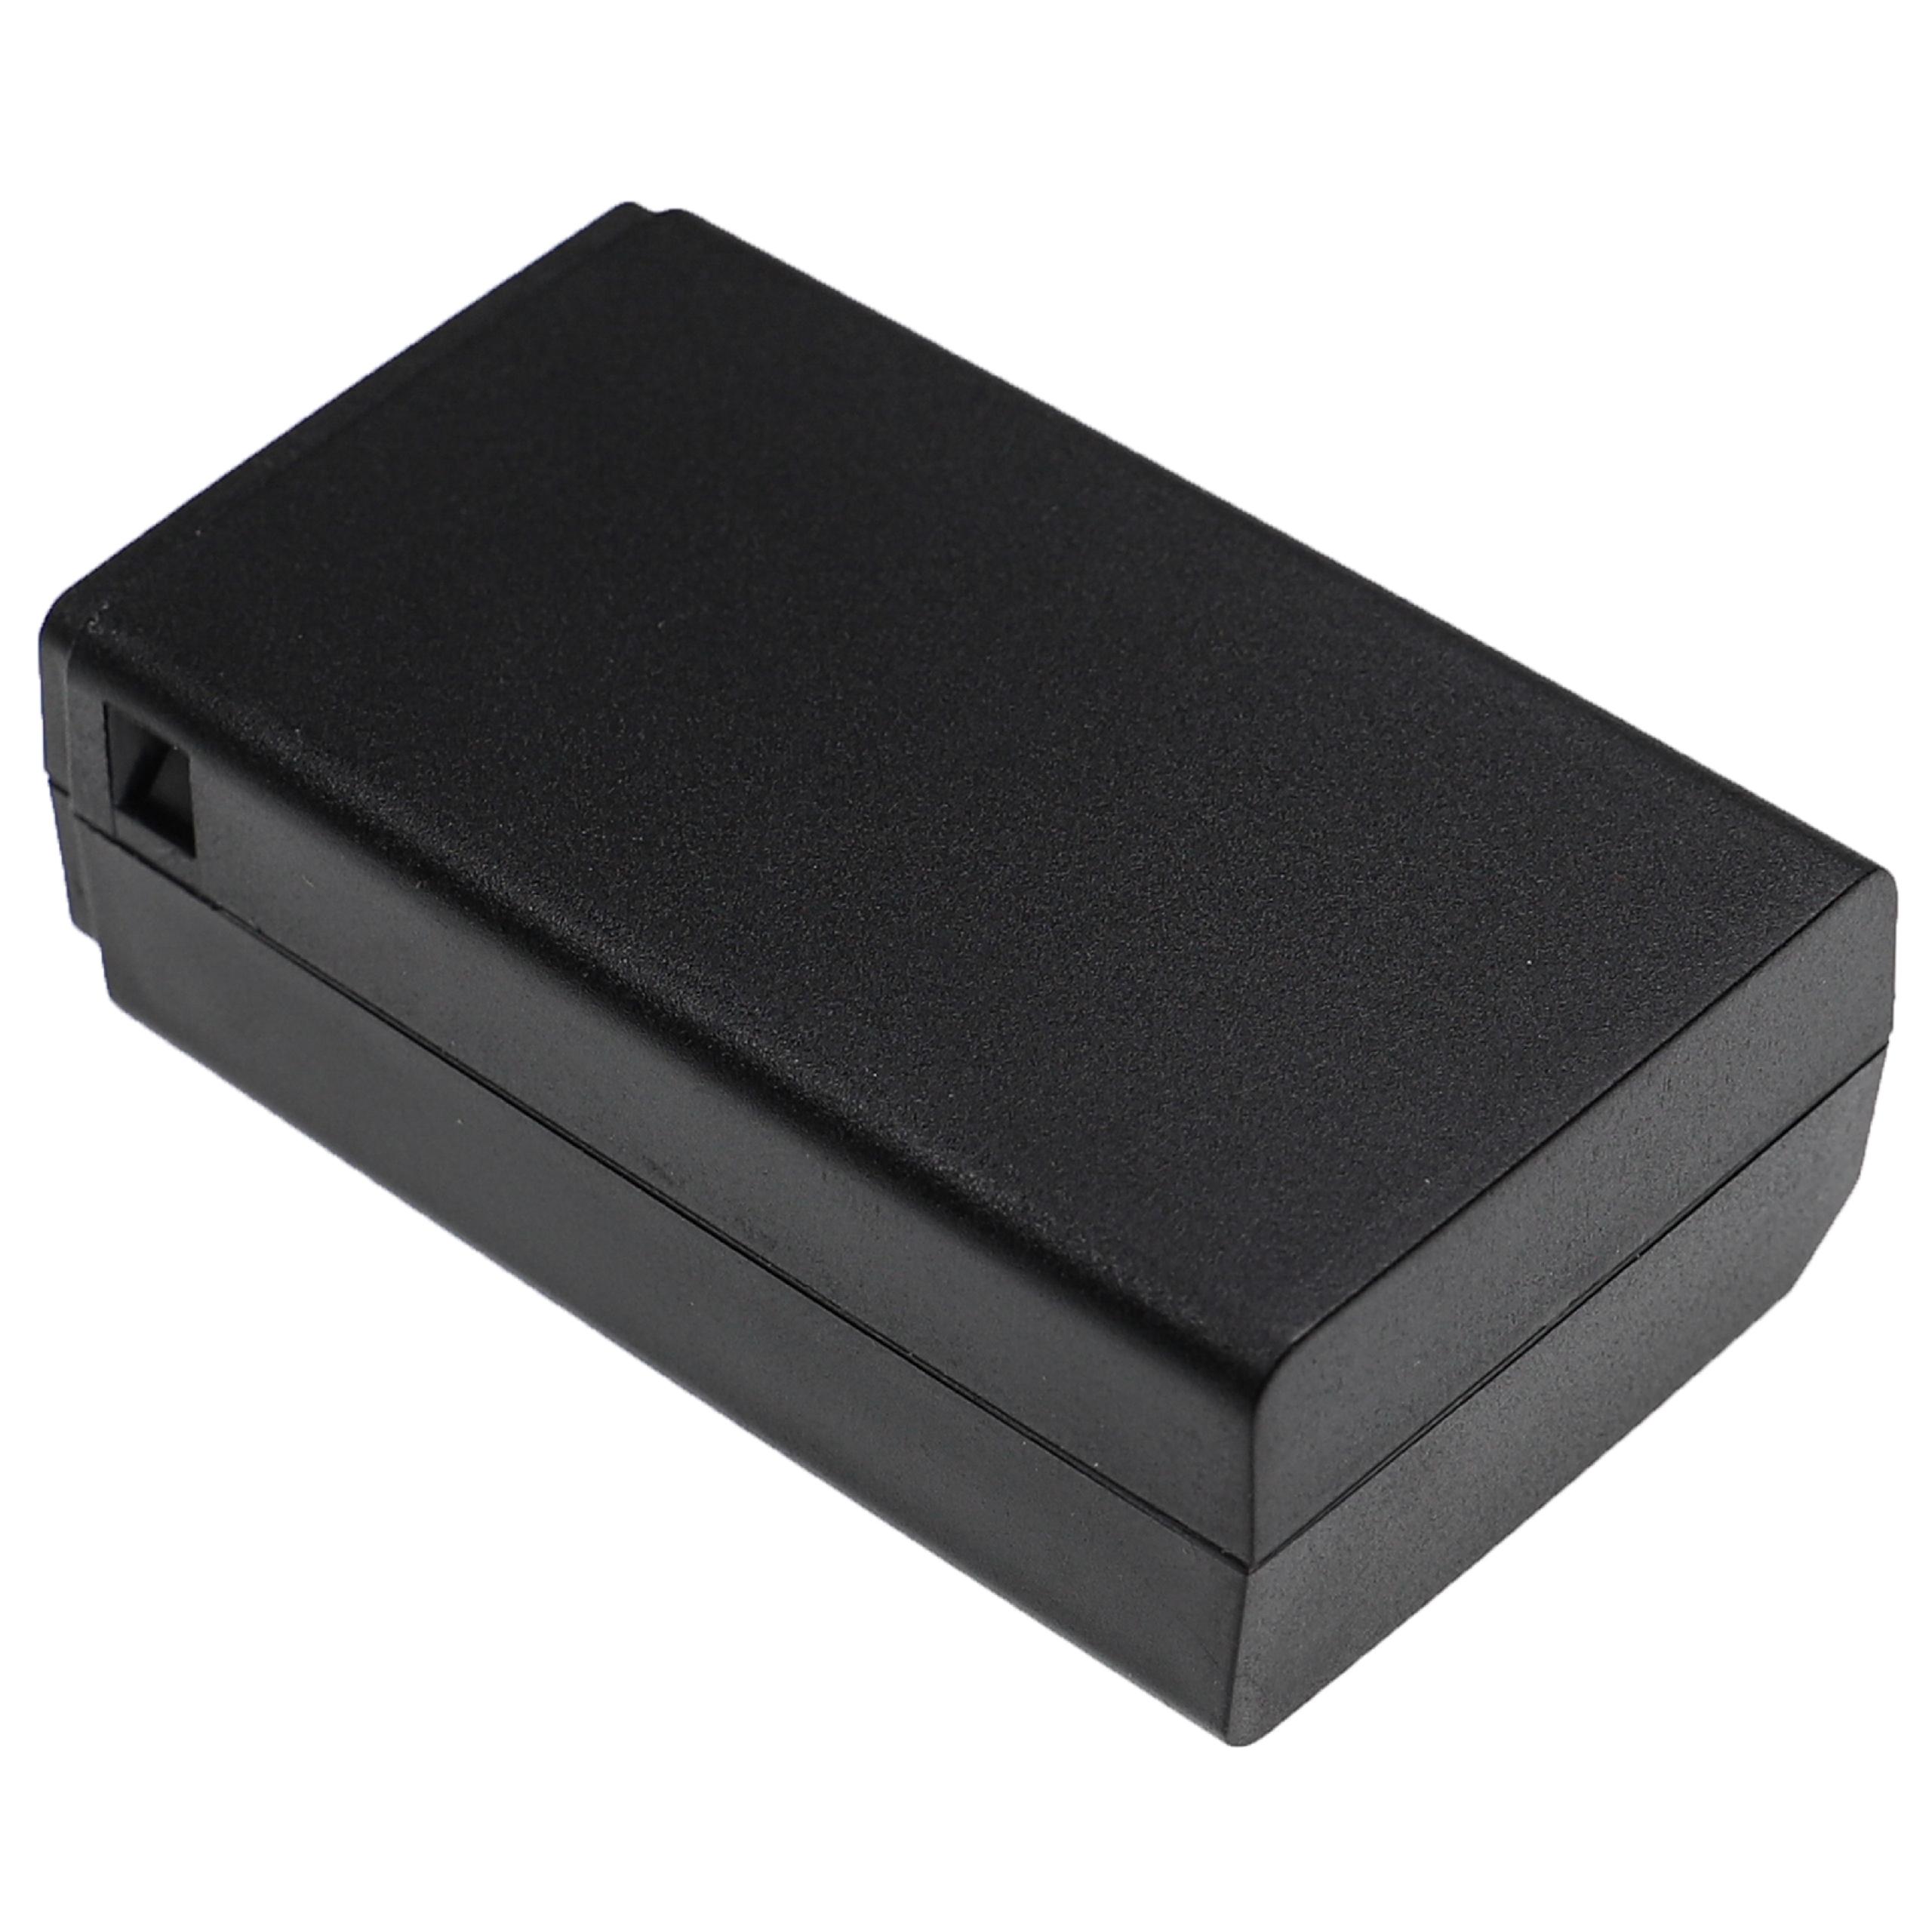 Batería reemplaza Godox VB26A, VB26 para dispositivos de flash Godox - 2600 mAh 7,2 V Li-Ion